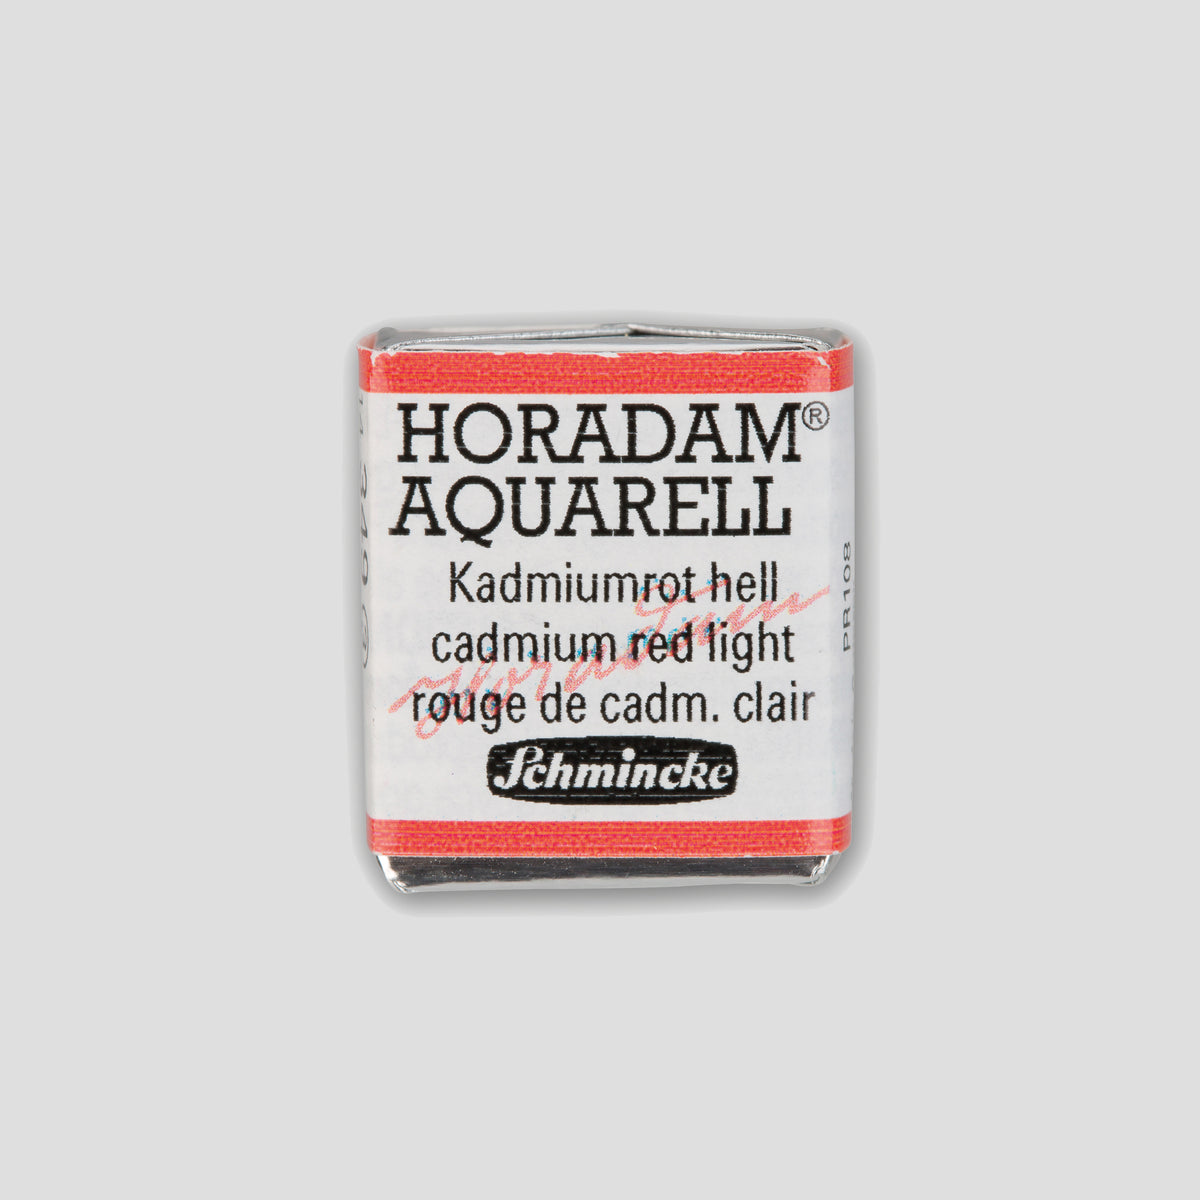 Schmincke Horadam® Halbpfanne Cadmiumrot hell